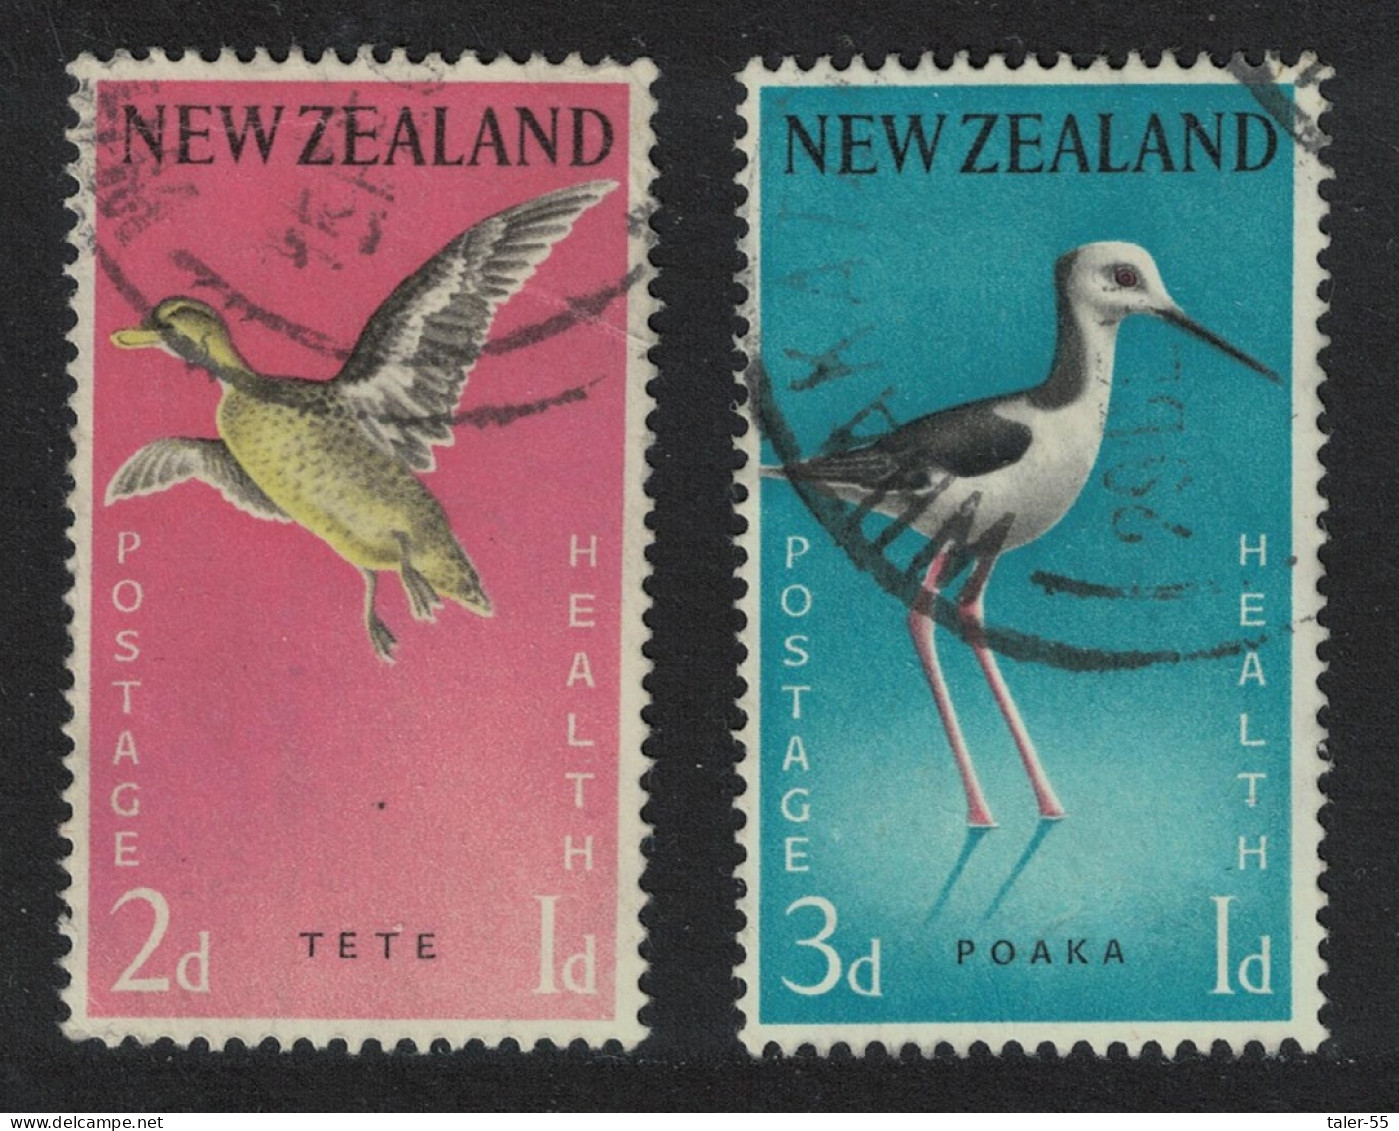 New Zealand Teal Stilt Birds 2v 1959 Canc SG#776-777 MI#386-387 - Gebruikt